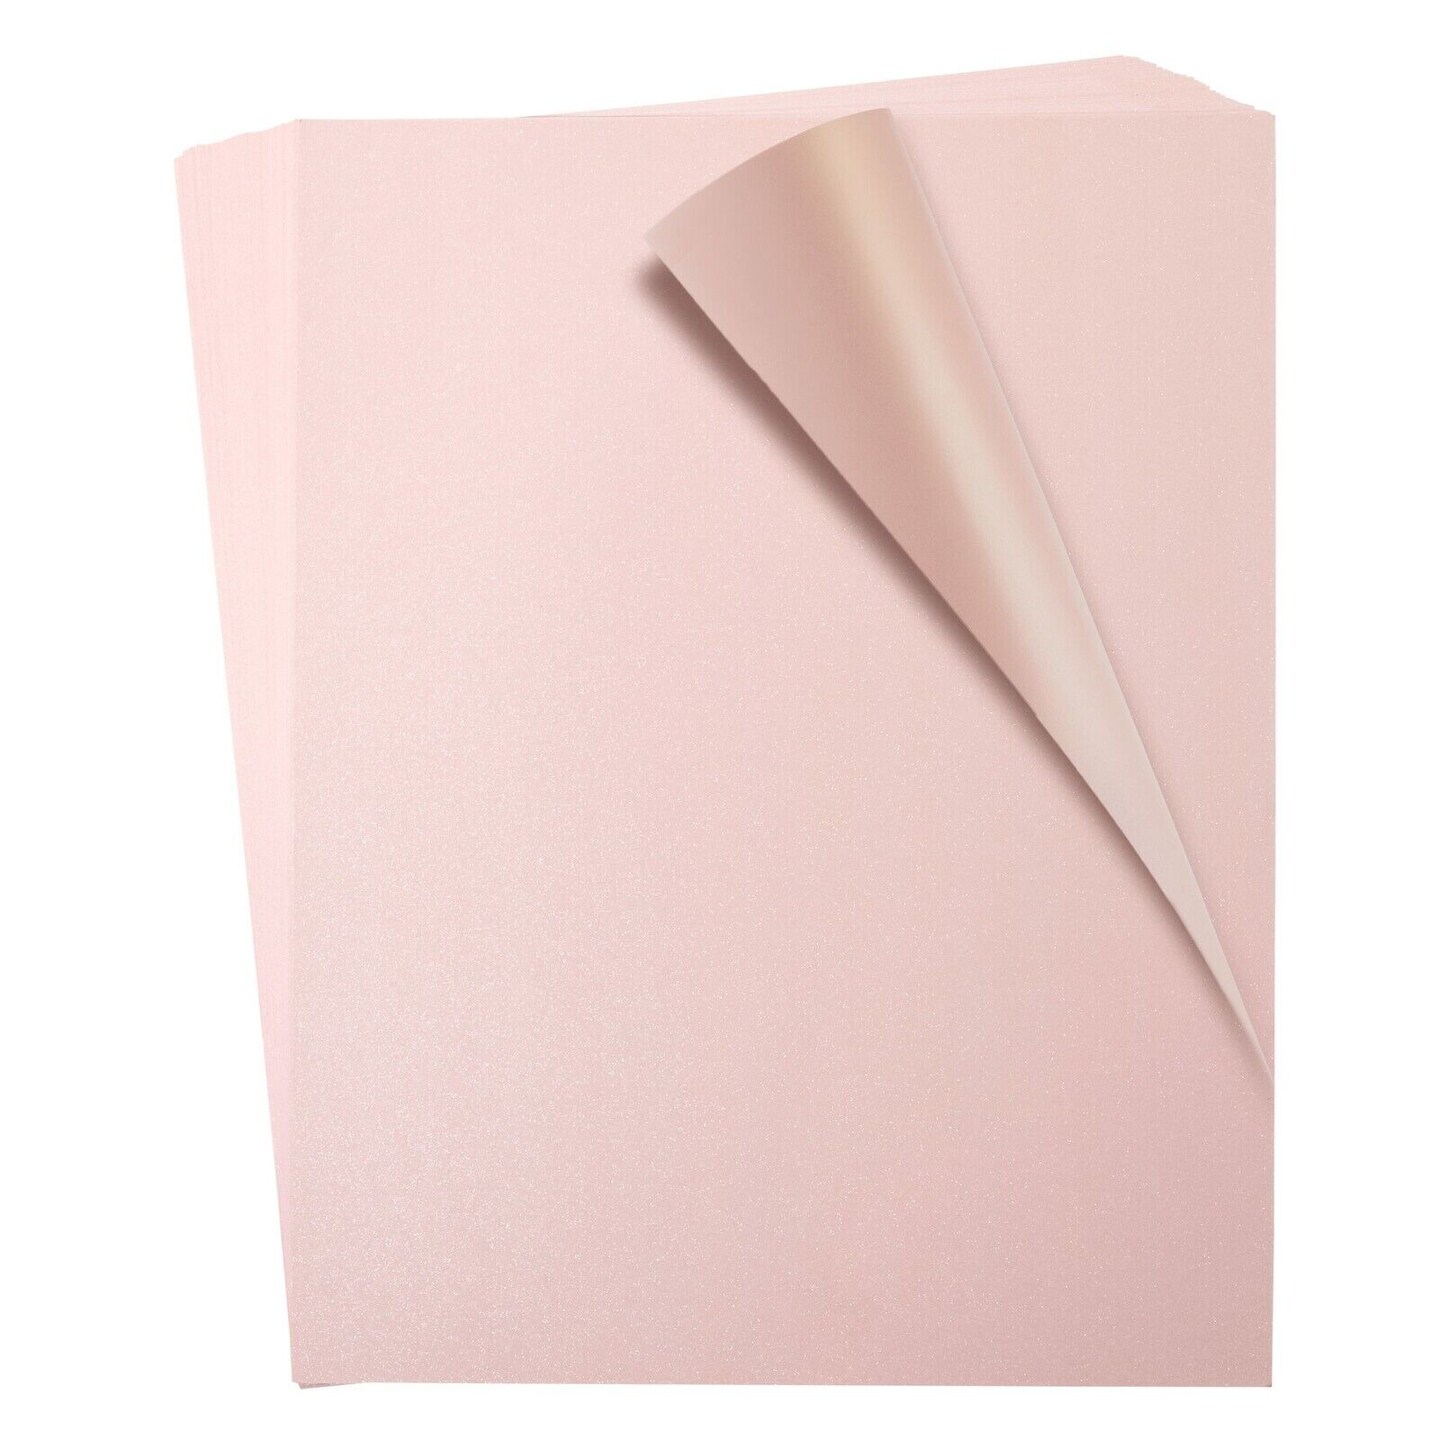 48 Sheets Pink Metallic Shimmer Cardstock Paper for Crafts